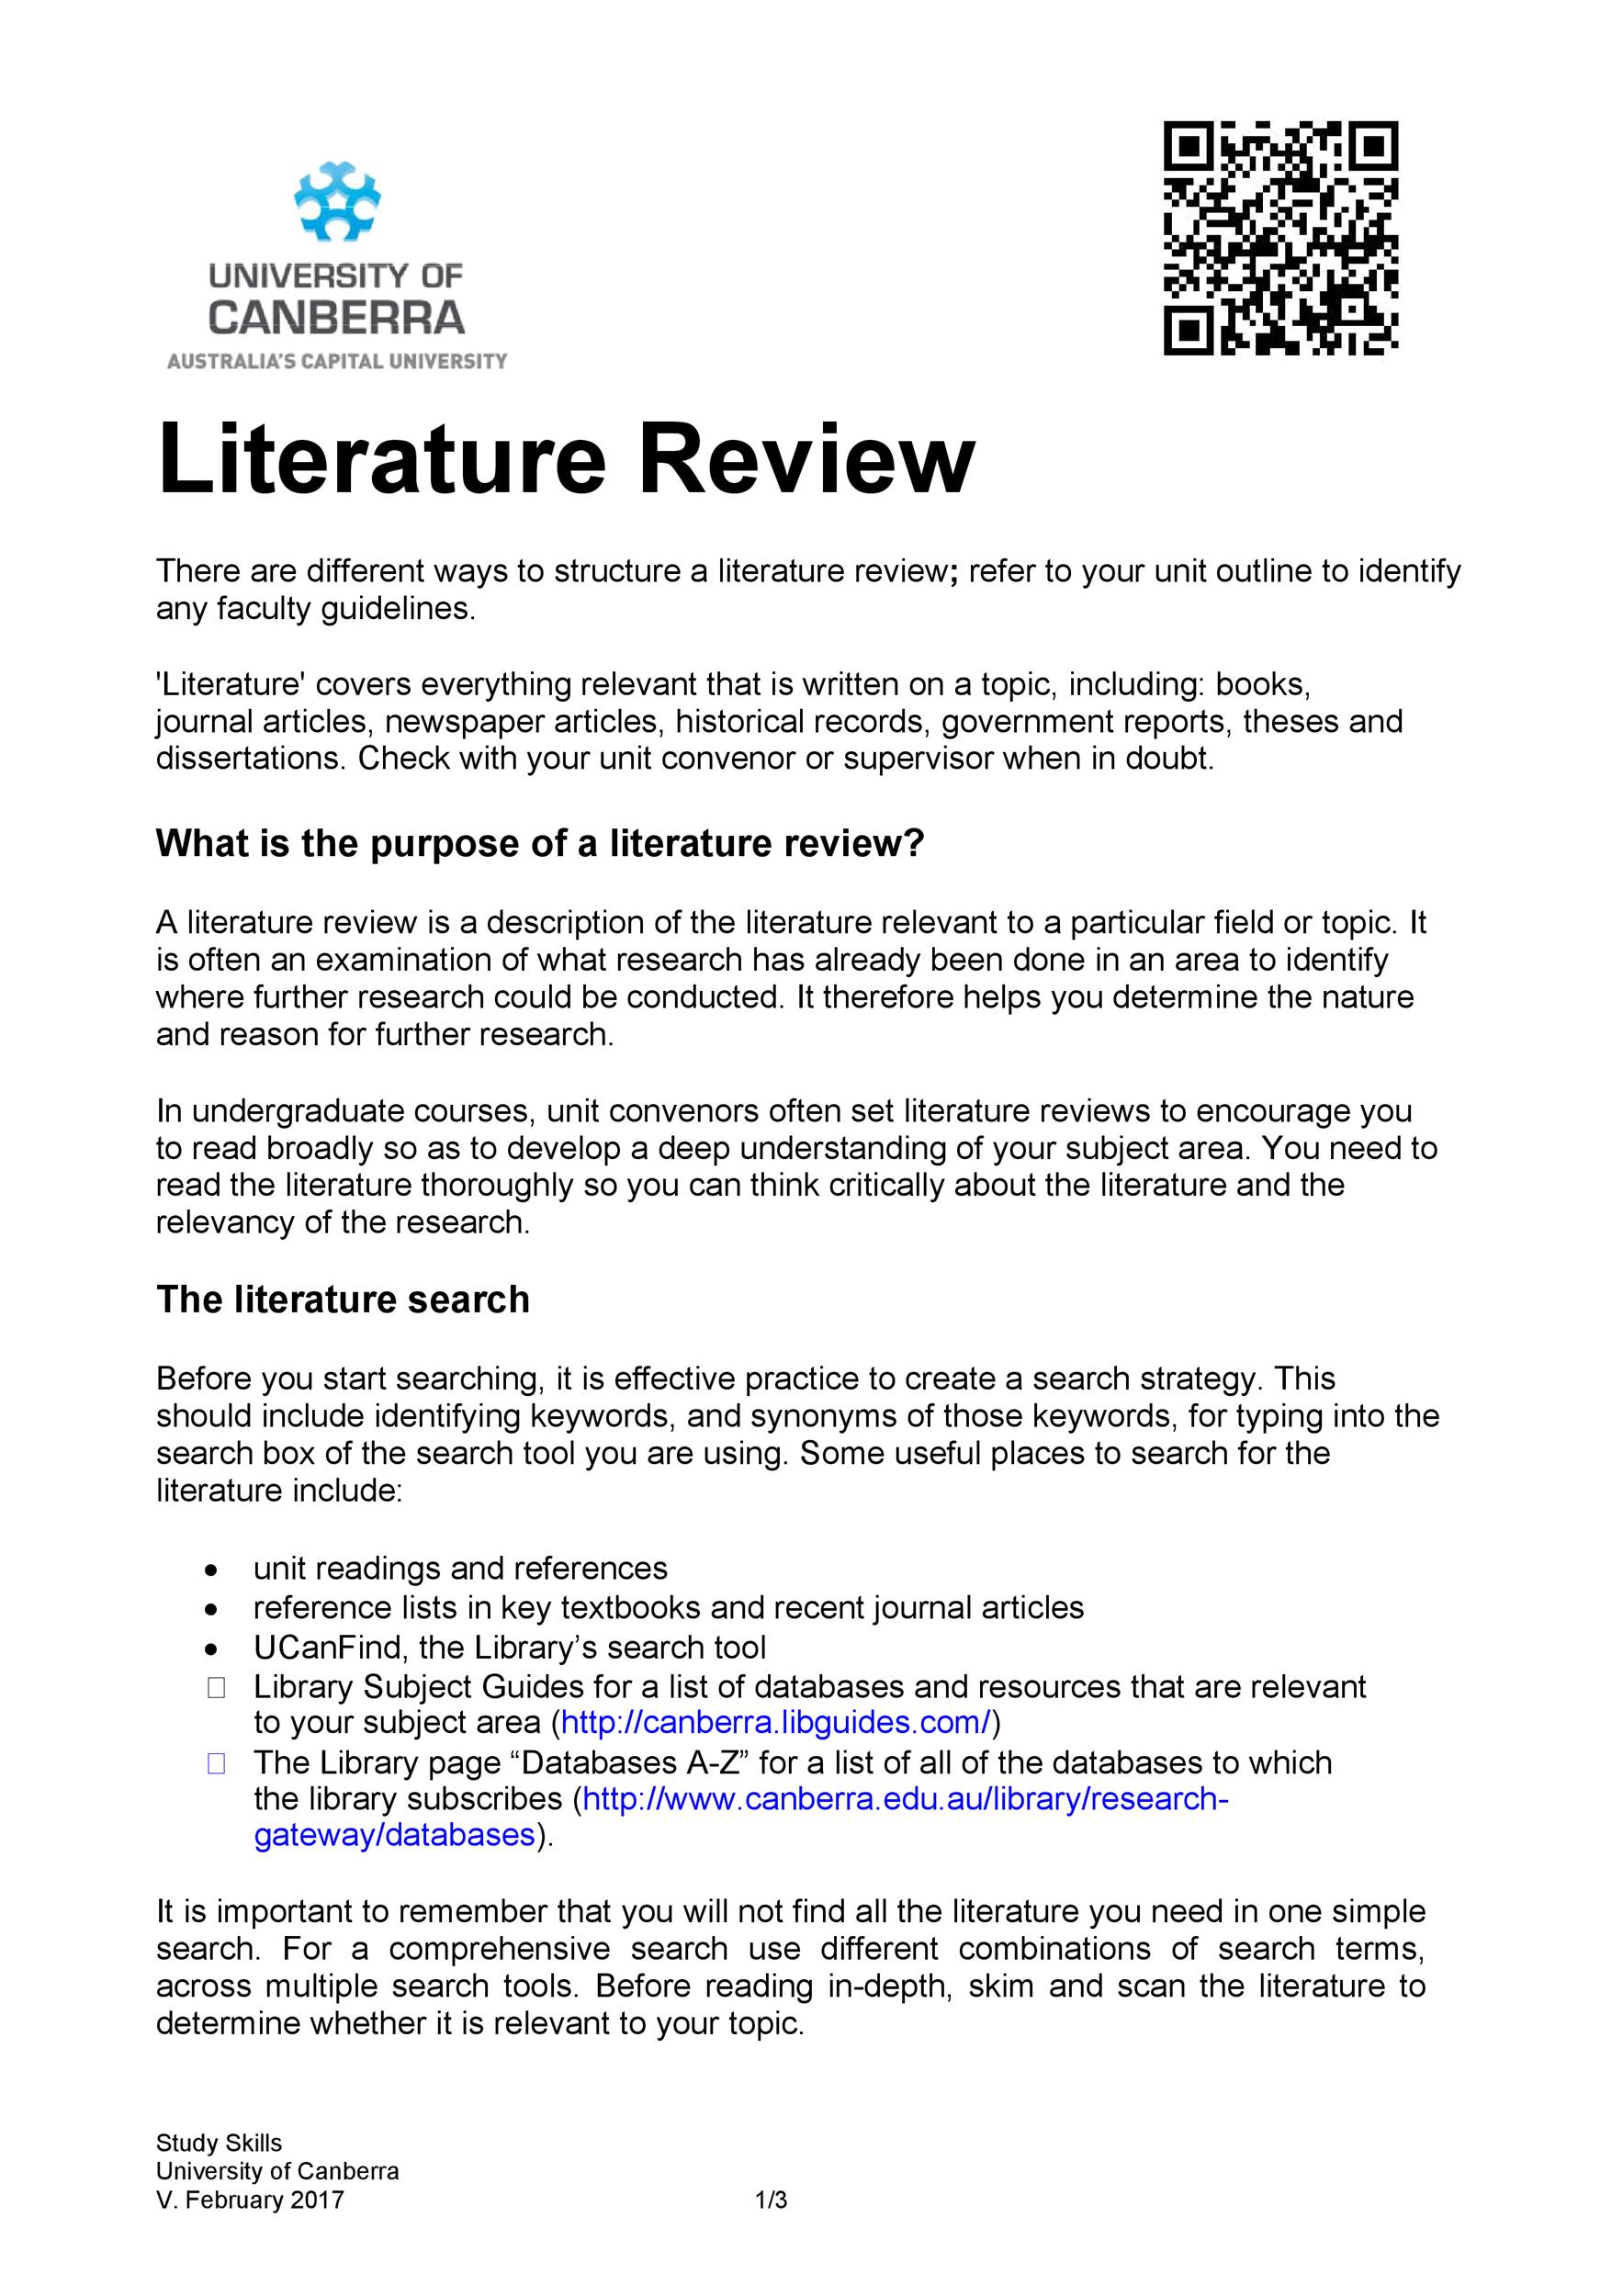 short literature review example apa